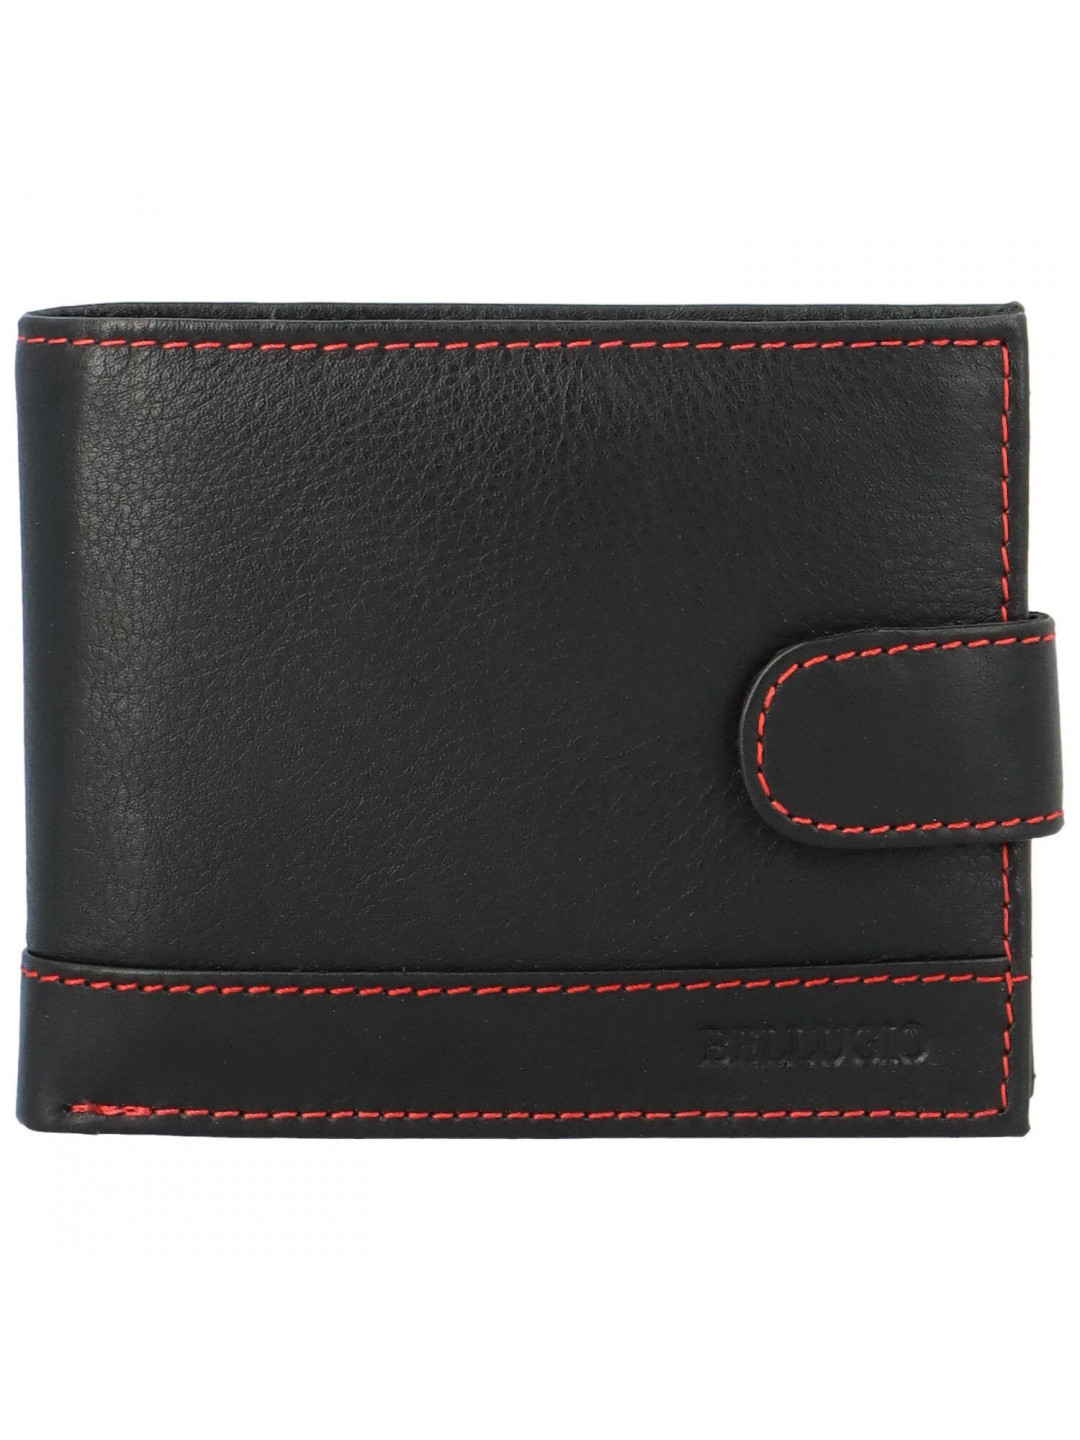 Pánská kožená peněženka černá – Bellugio Carloson